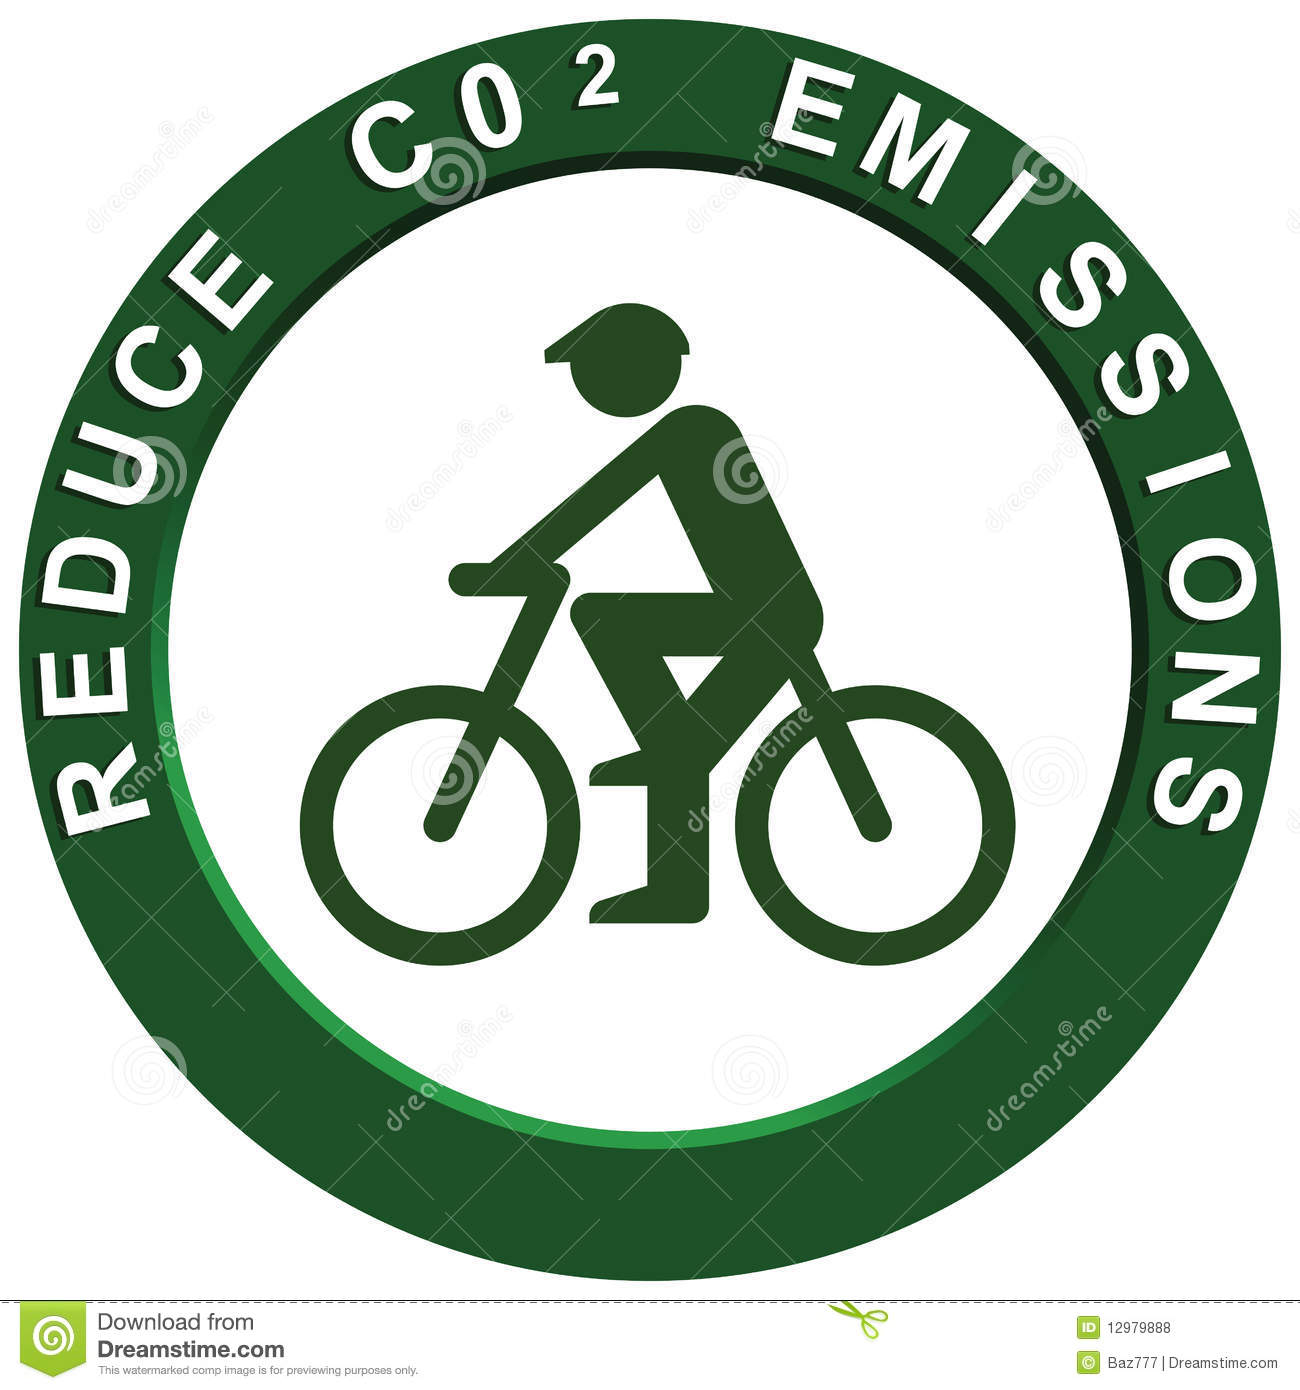 Reduce Carbon Emissions Pushbike Royalty Free Stock Photos   Image    